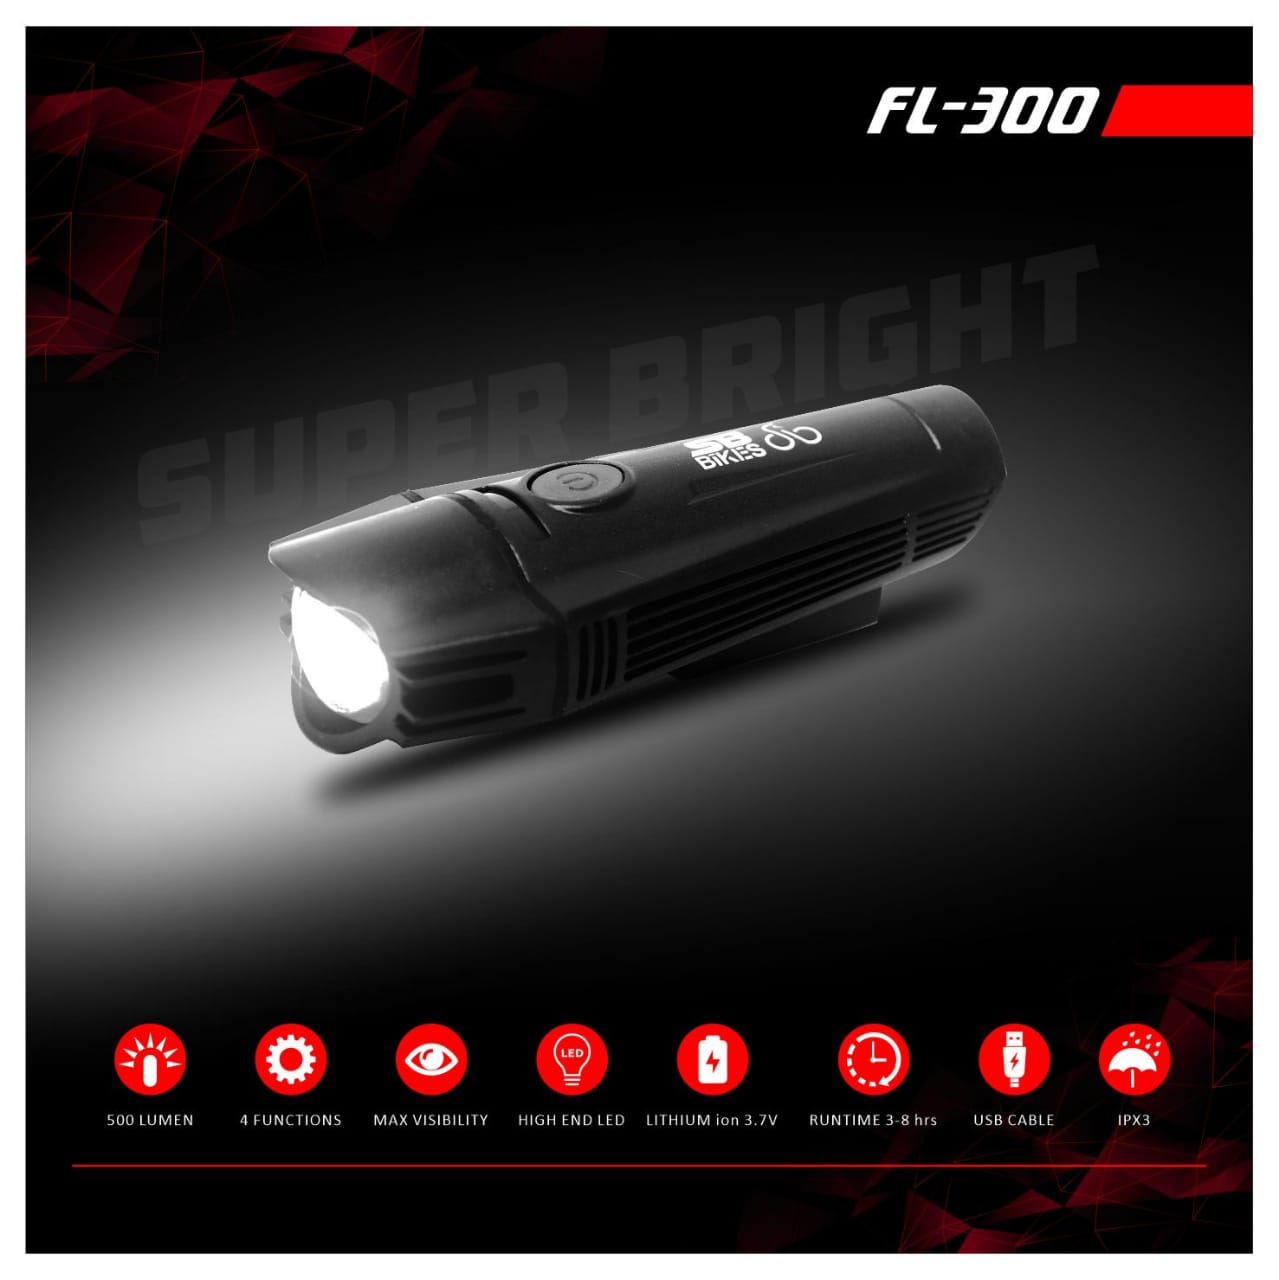 FL-300 (Super Bright Light)